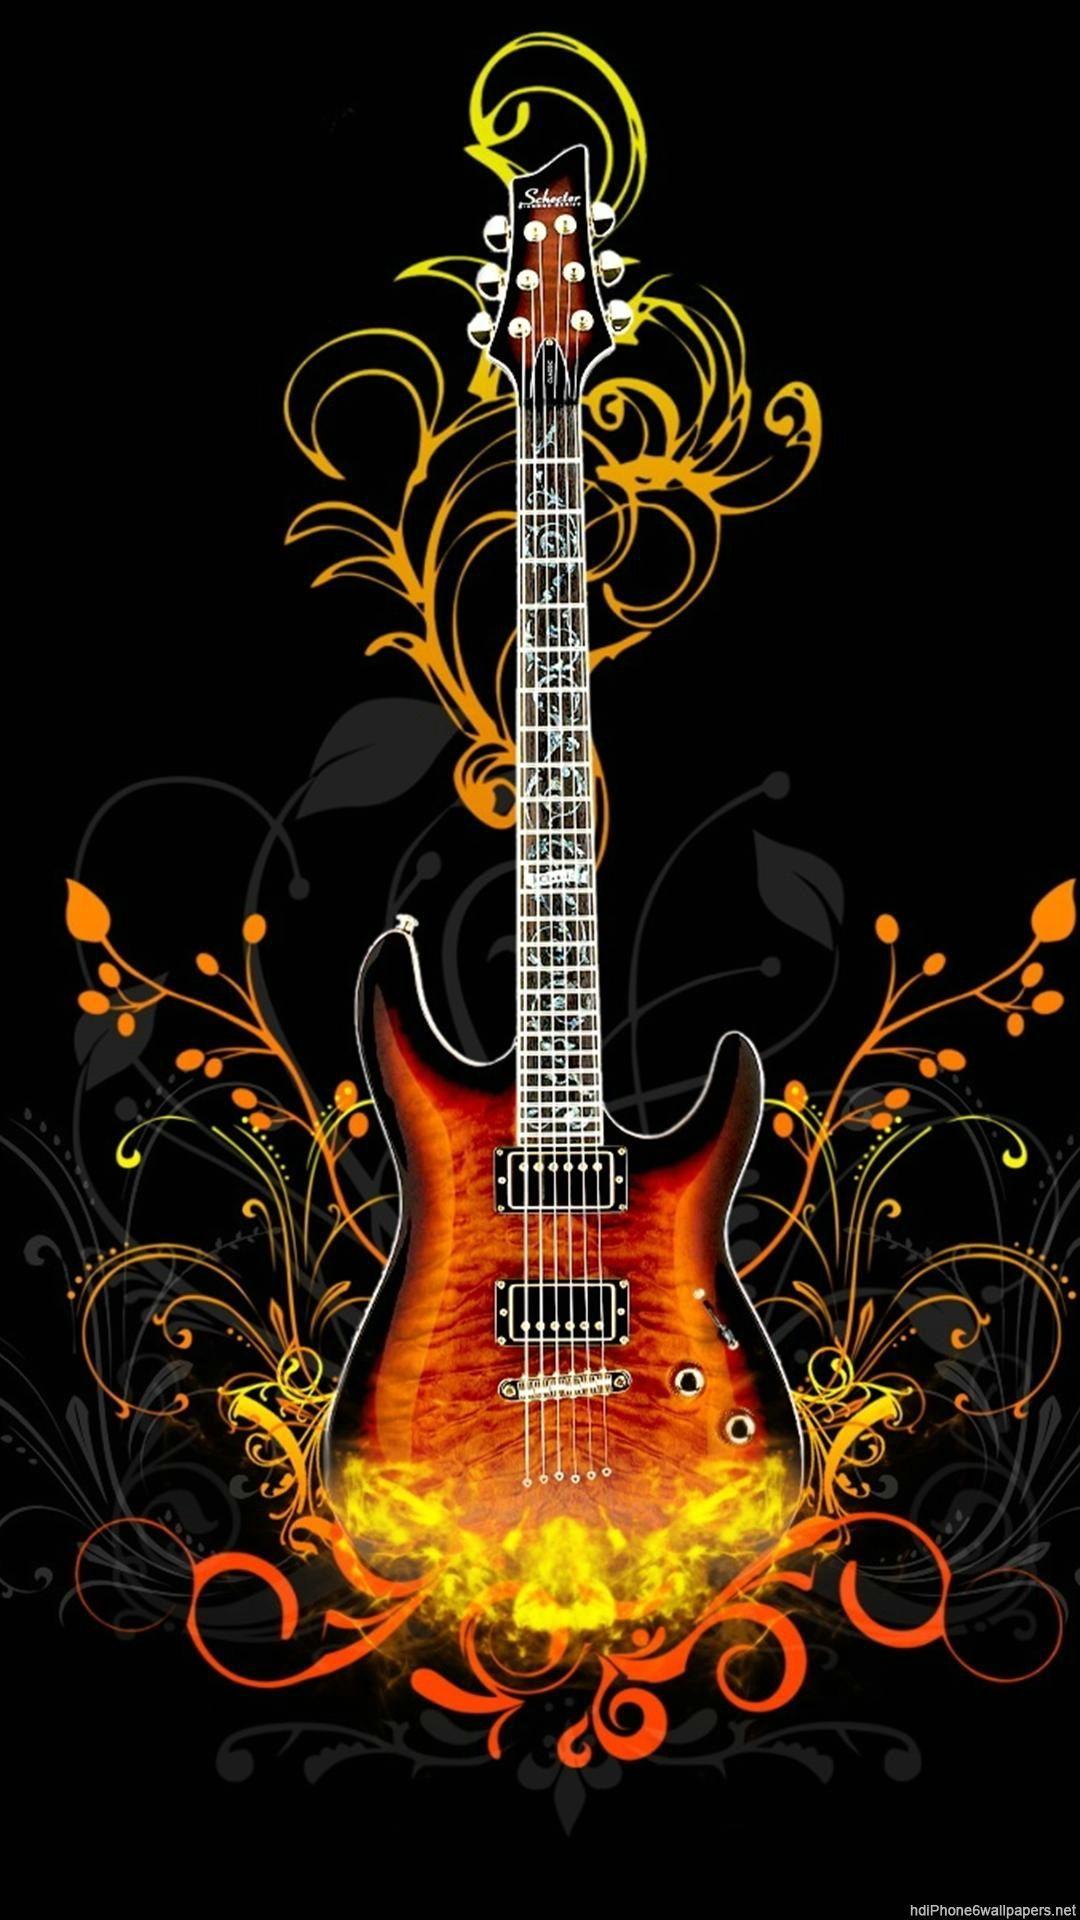 3D Guitar Wallpaper iPhone iPhone Wallpaper. Guitar art